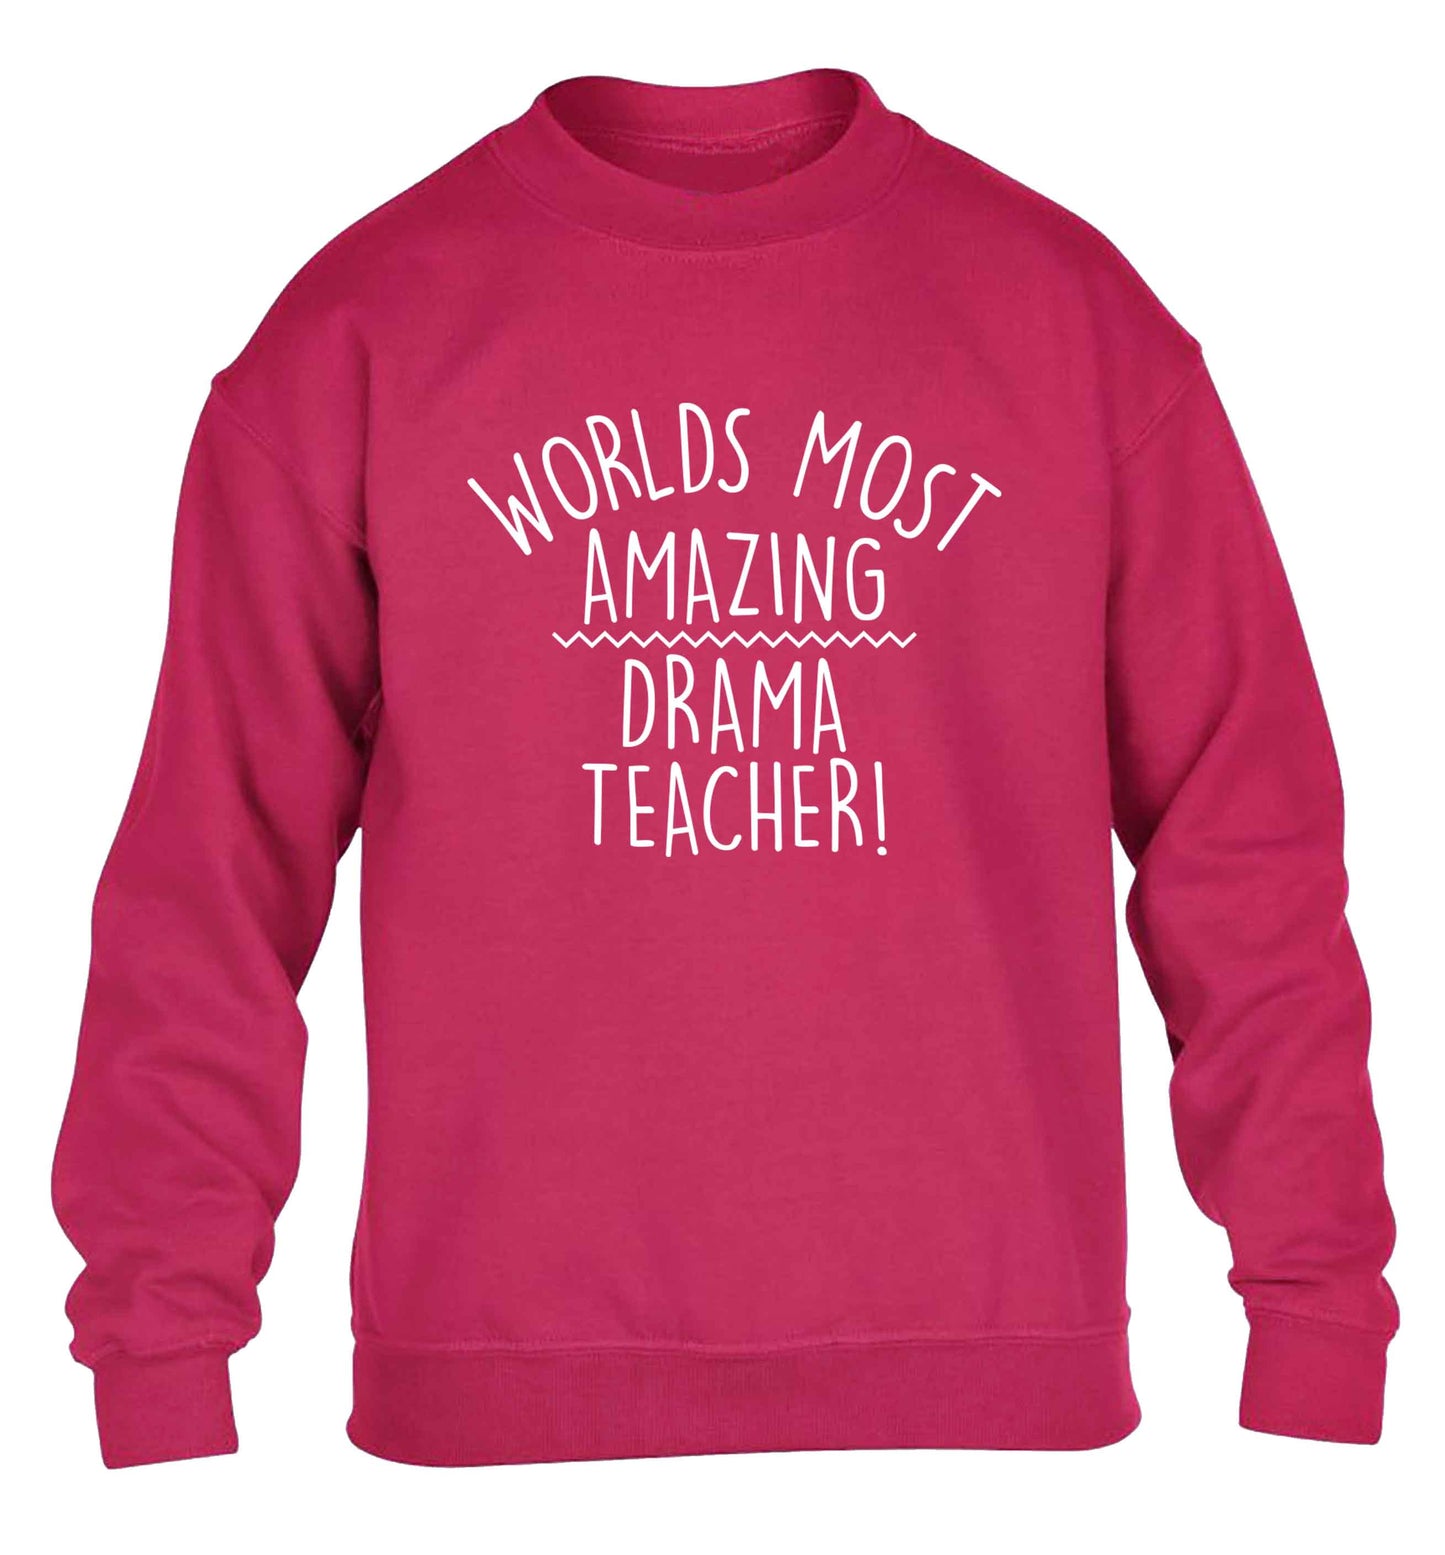 Worlds most amazing drama teacher children's pink sweater 12-13 Years